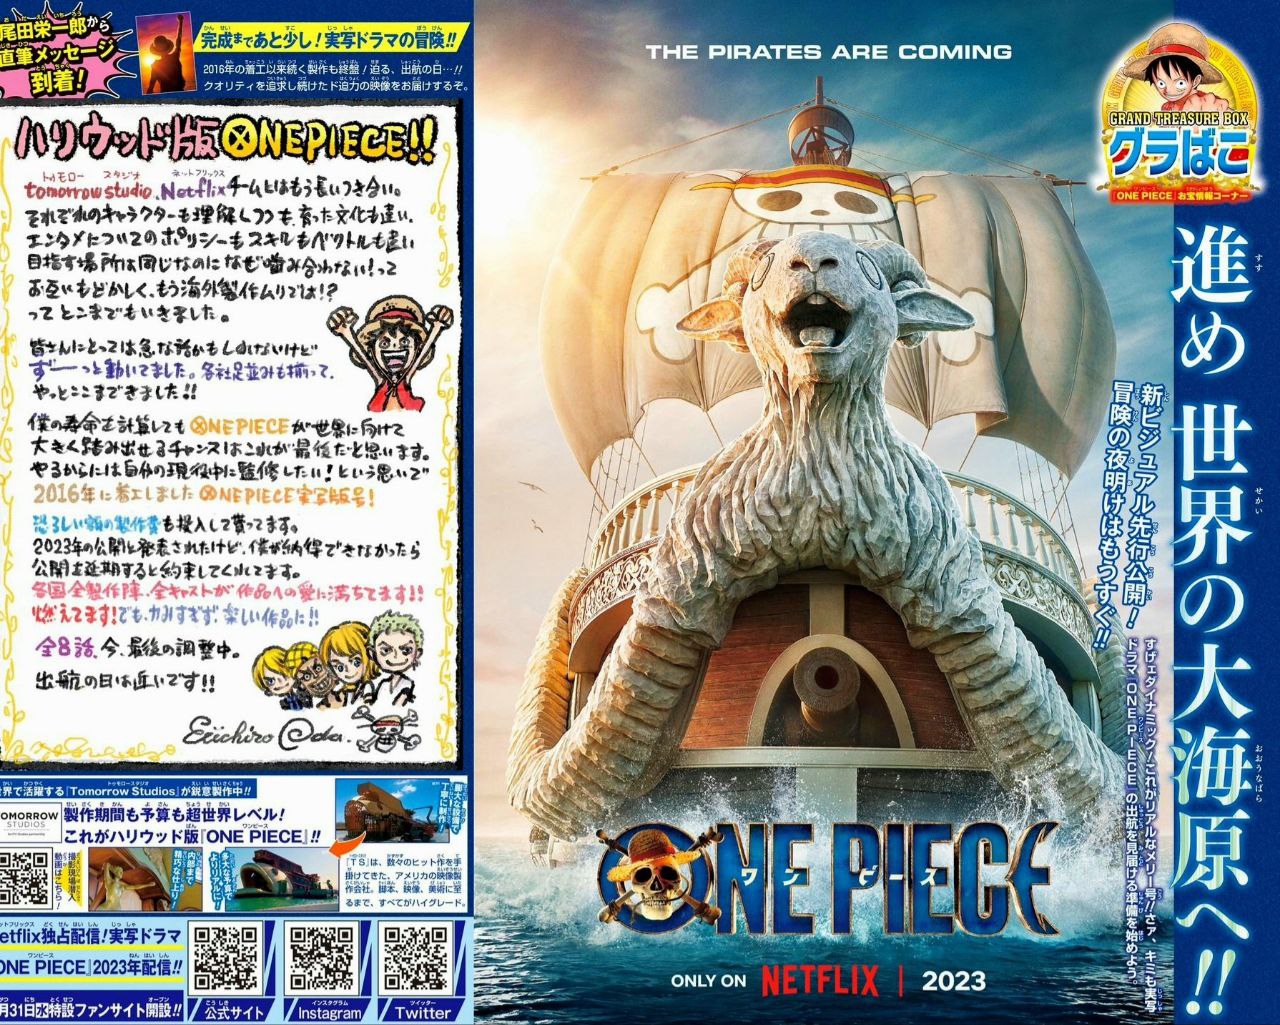 One Piece TV-Serie - Box 1